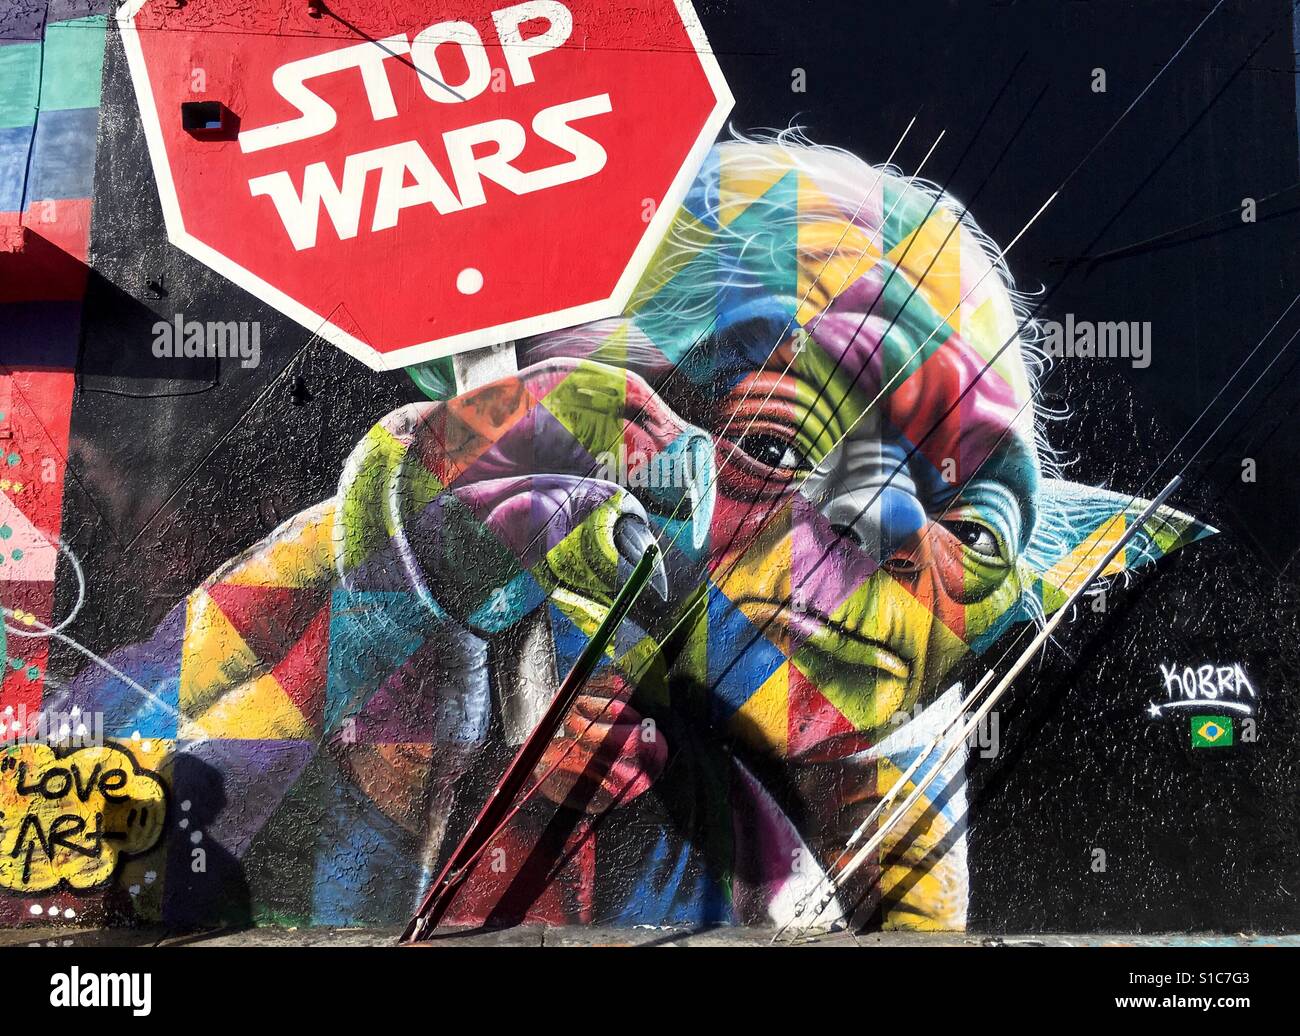 Yoda protests stop wars Stock Photo